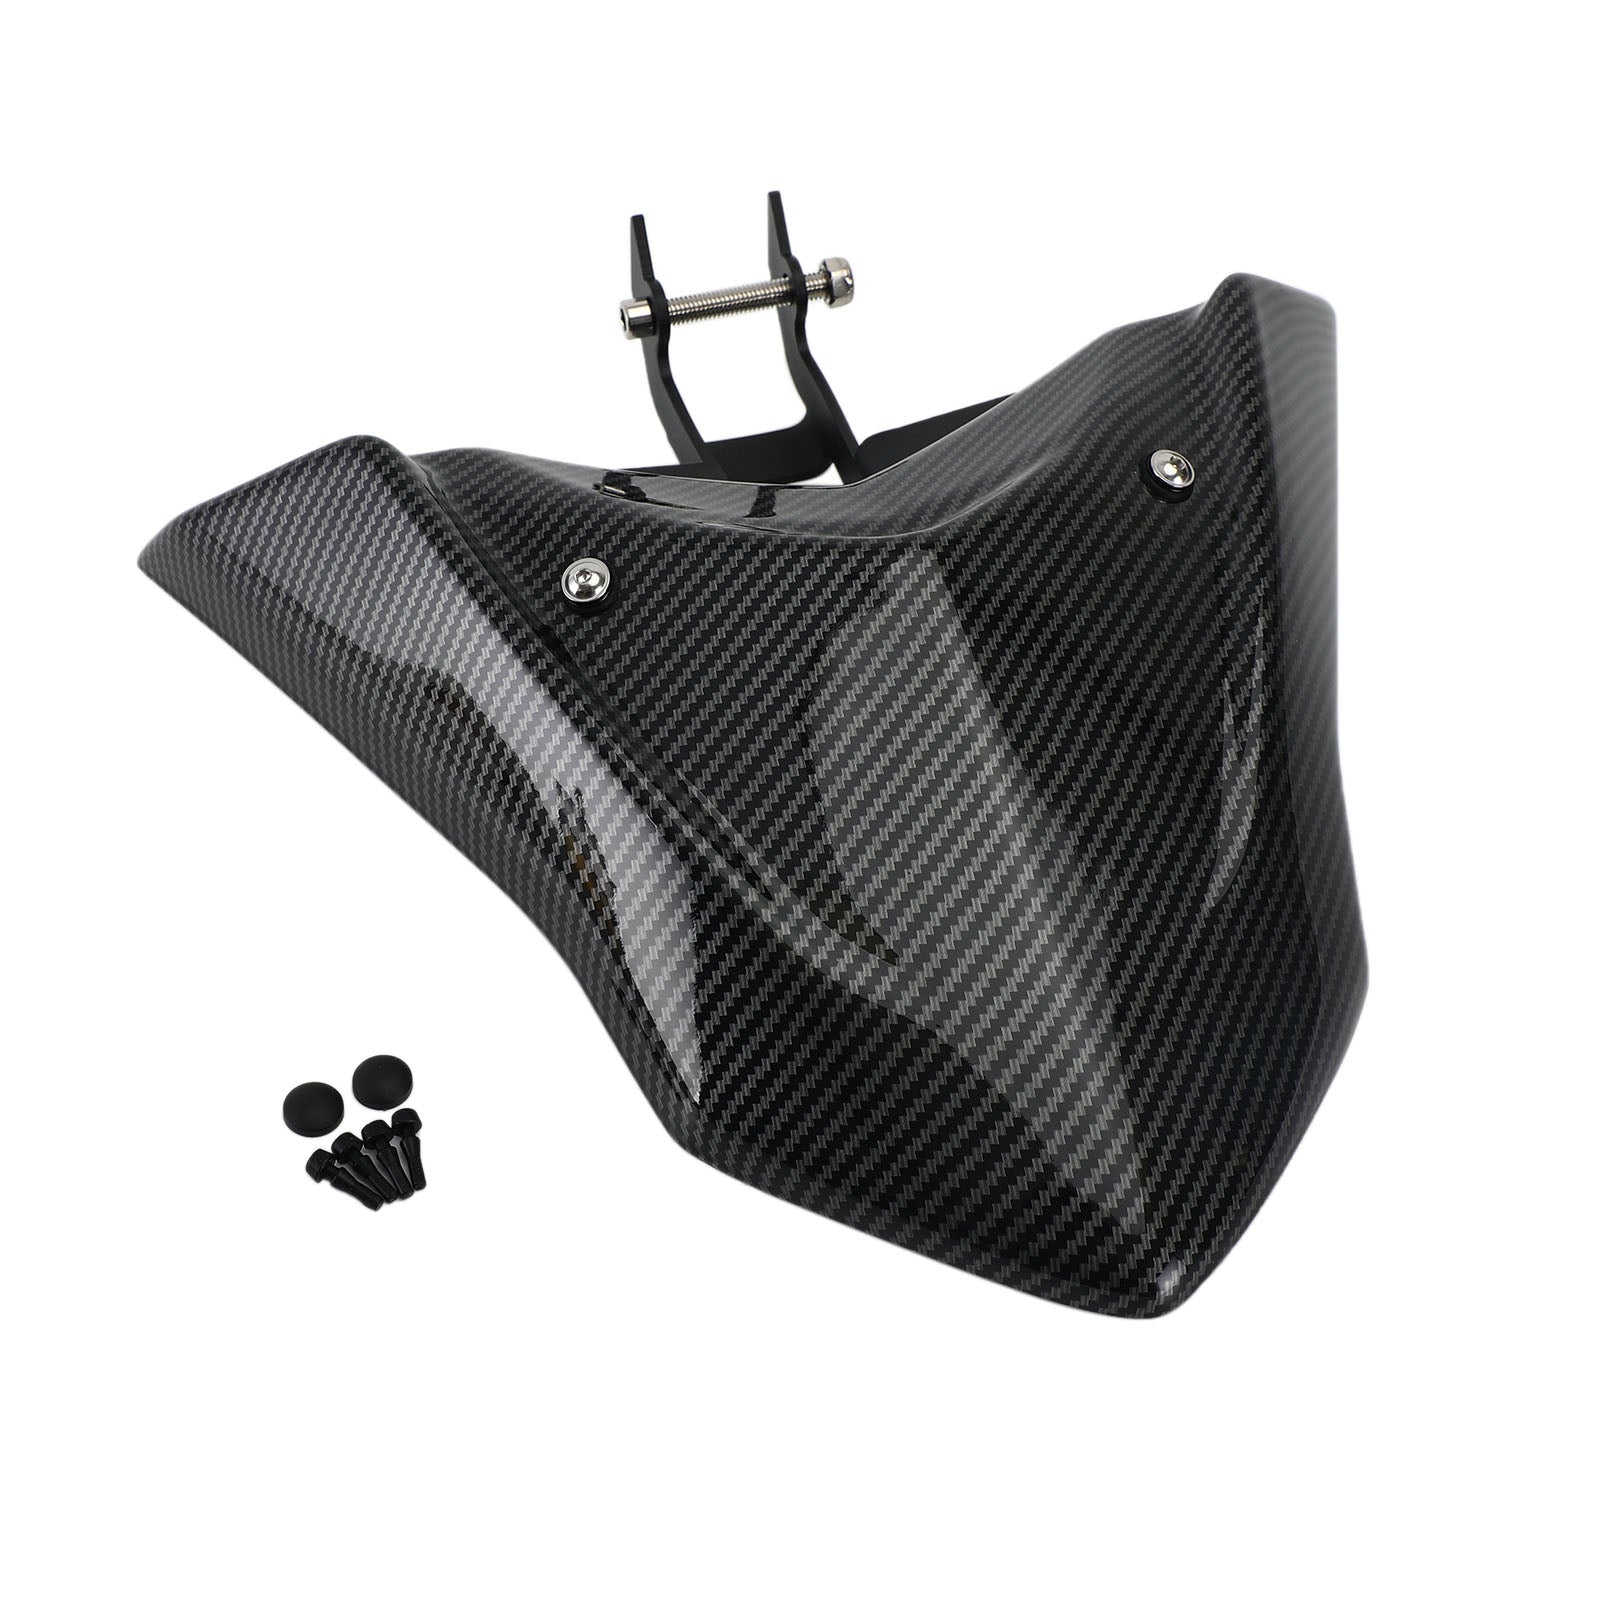 Estensione del becco del parafango anteriore in ABS in carbonio adatta per Yamaha Tenere 700 2019-2020 Generico